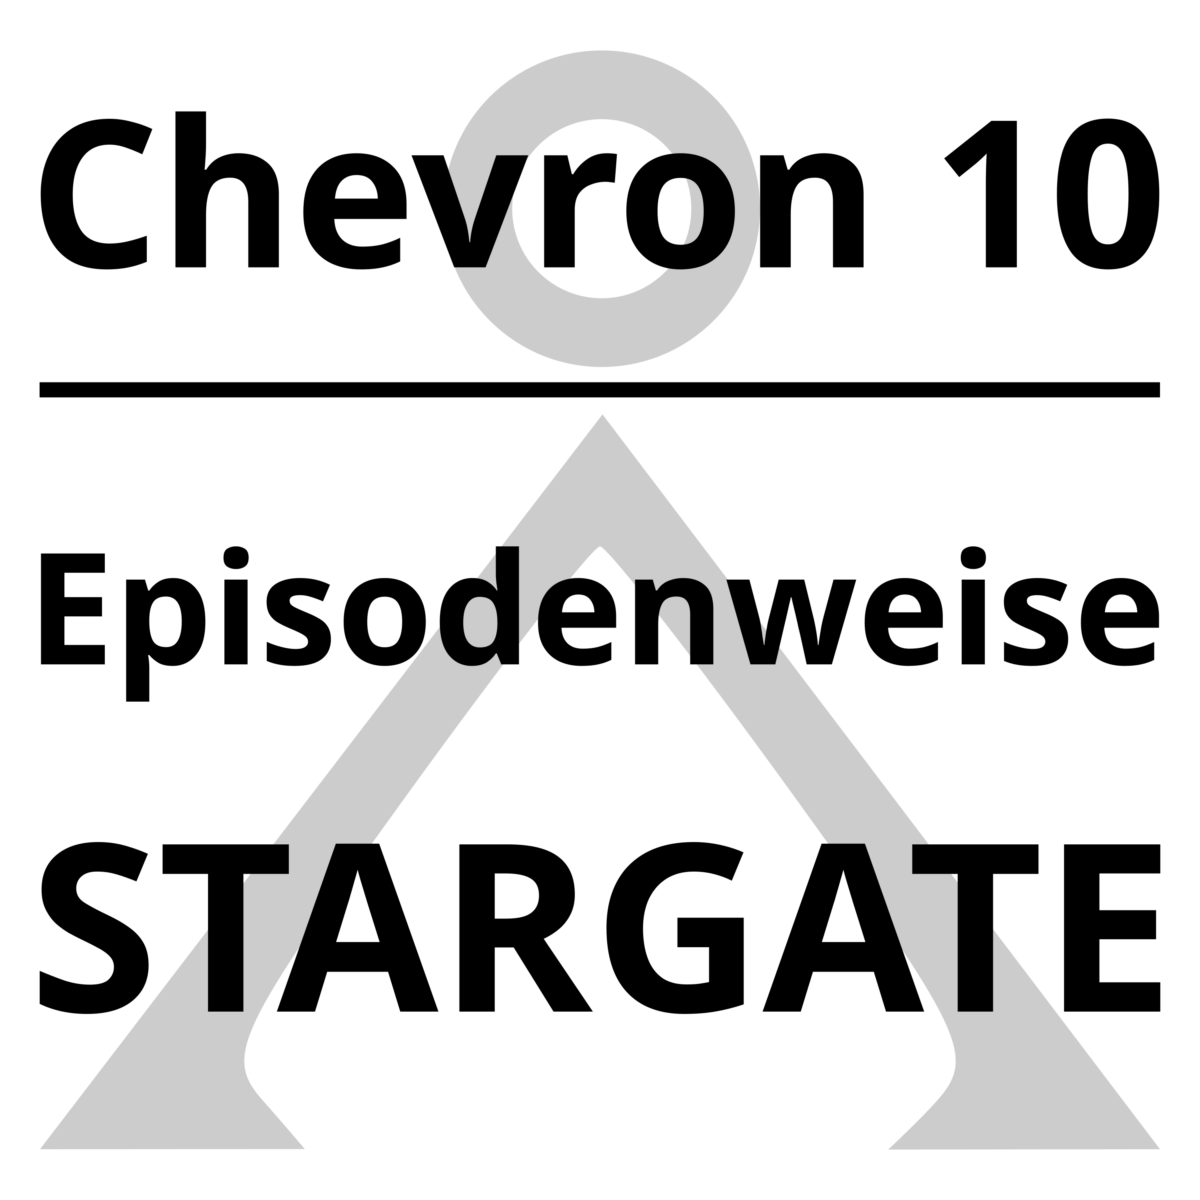 Chevron10-Logo. "Chevron 10 - Episodenweise Stargate"